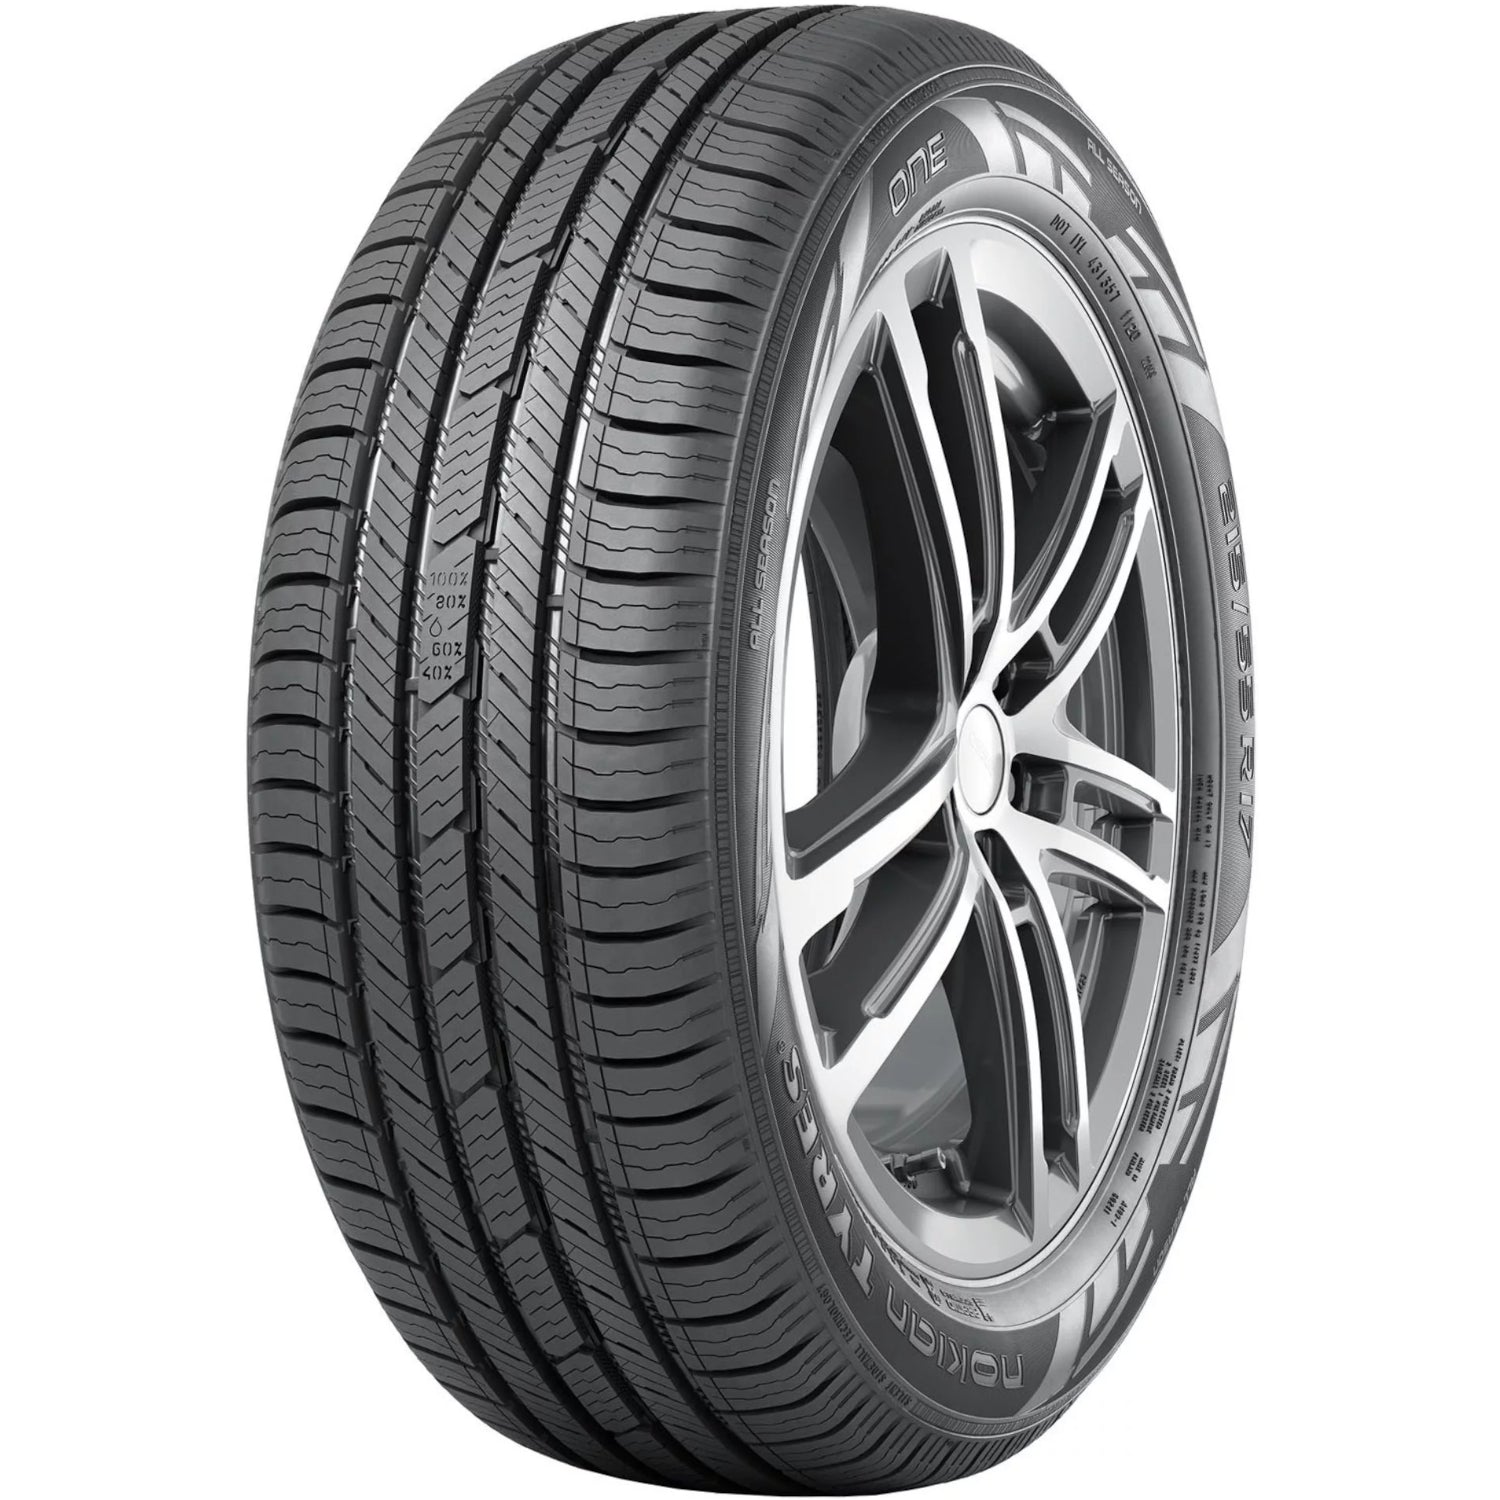 NOKIAN ONE 205/65R16 (26.5X8.1R 16) Tires